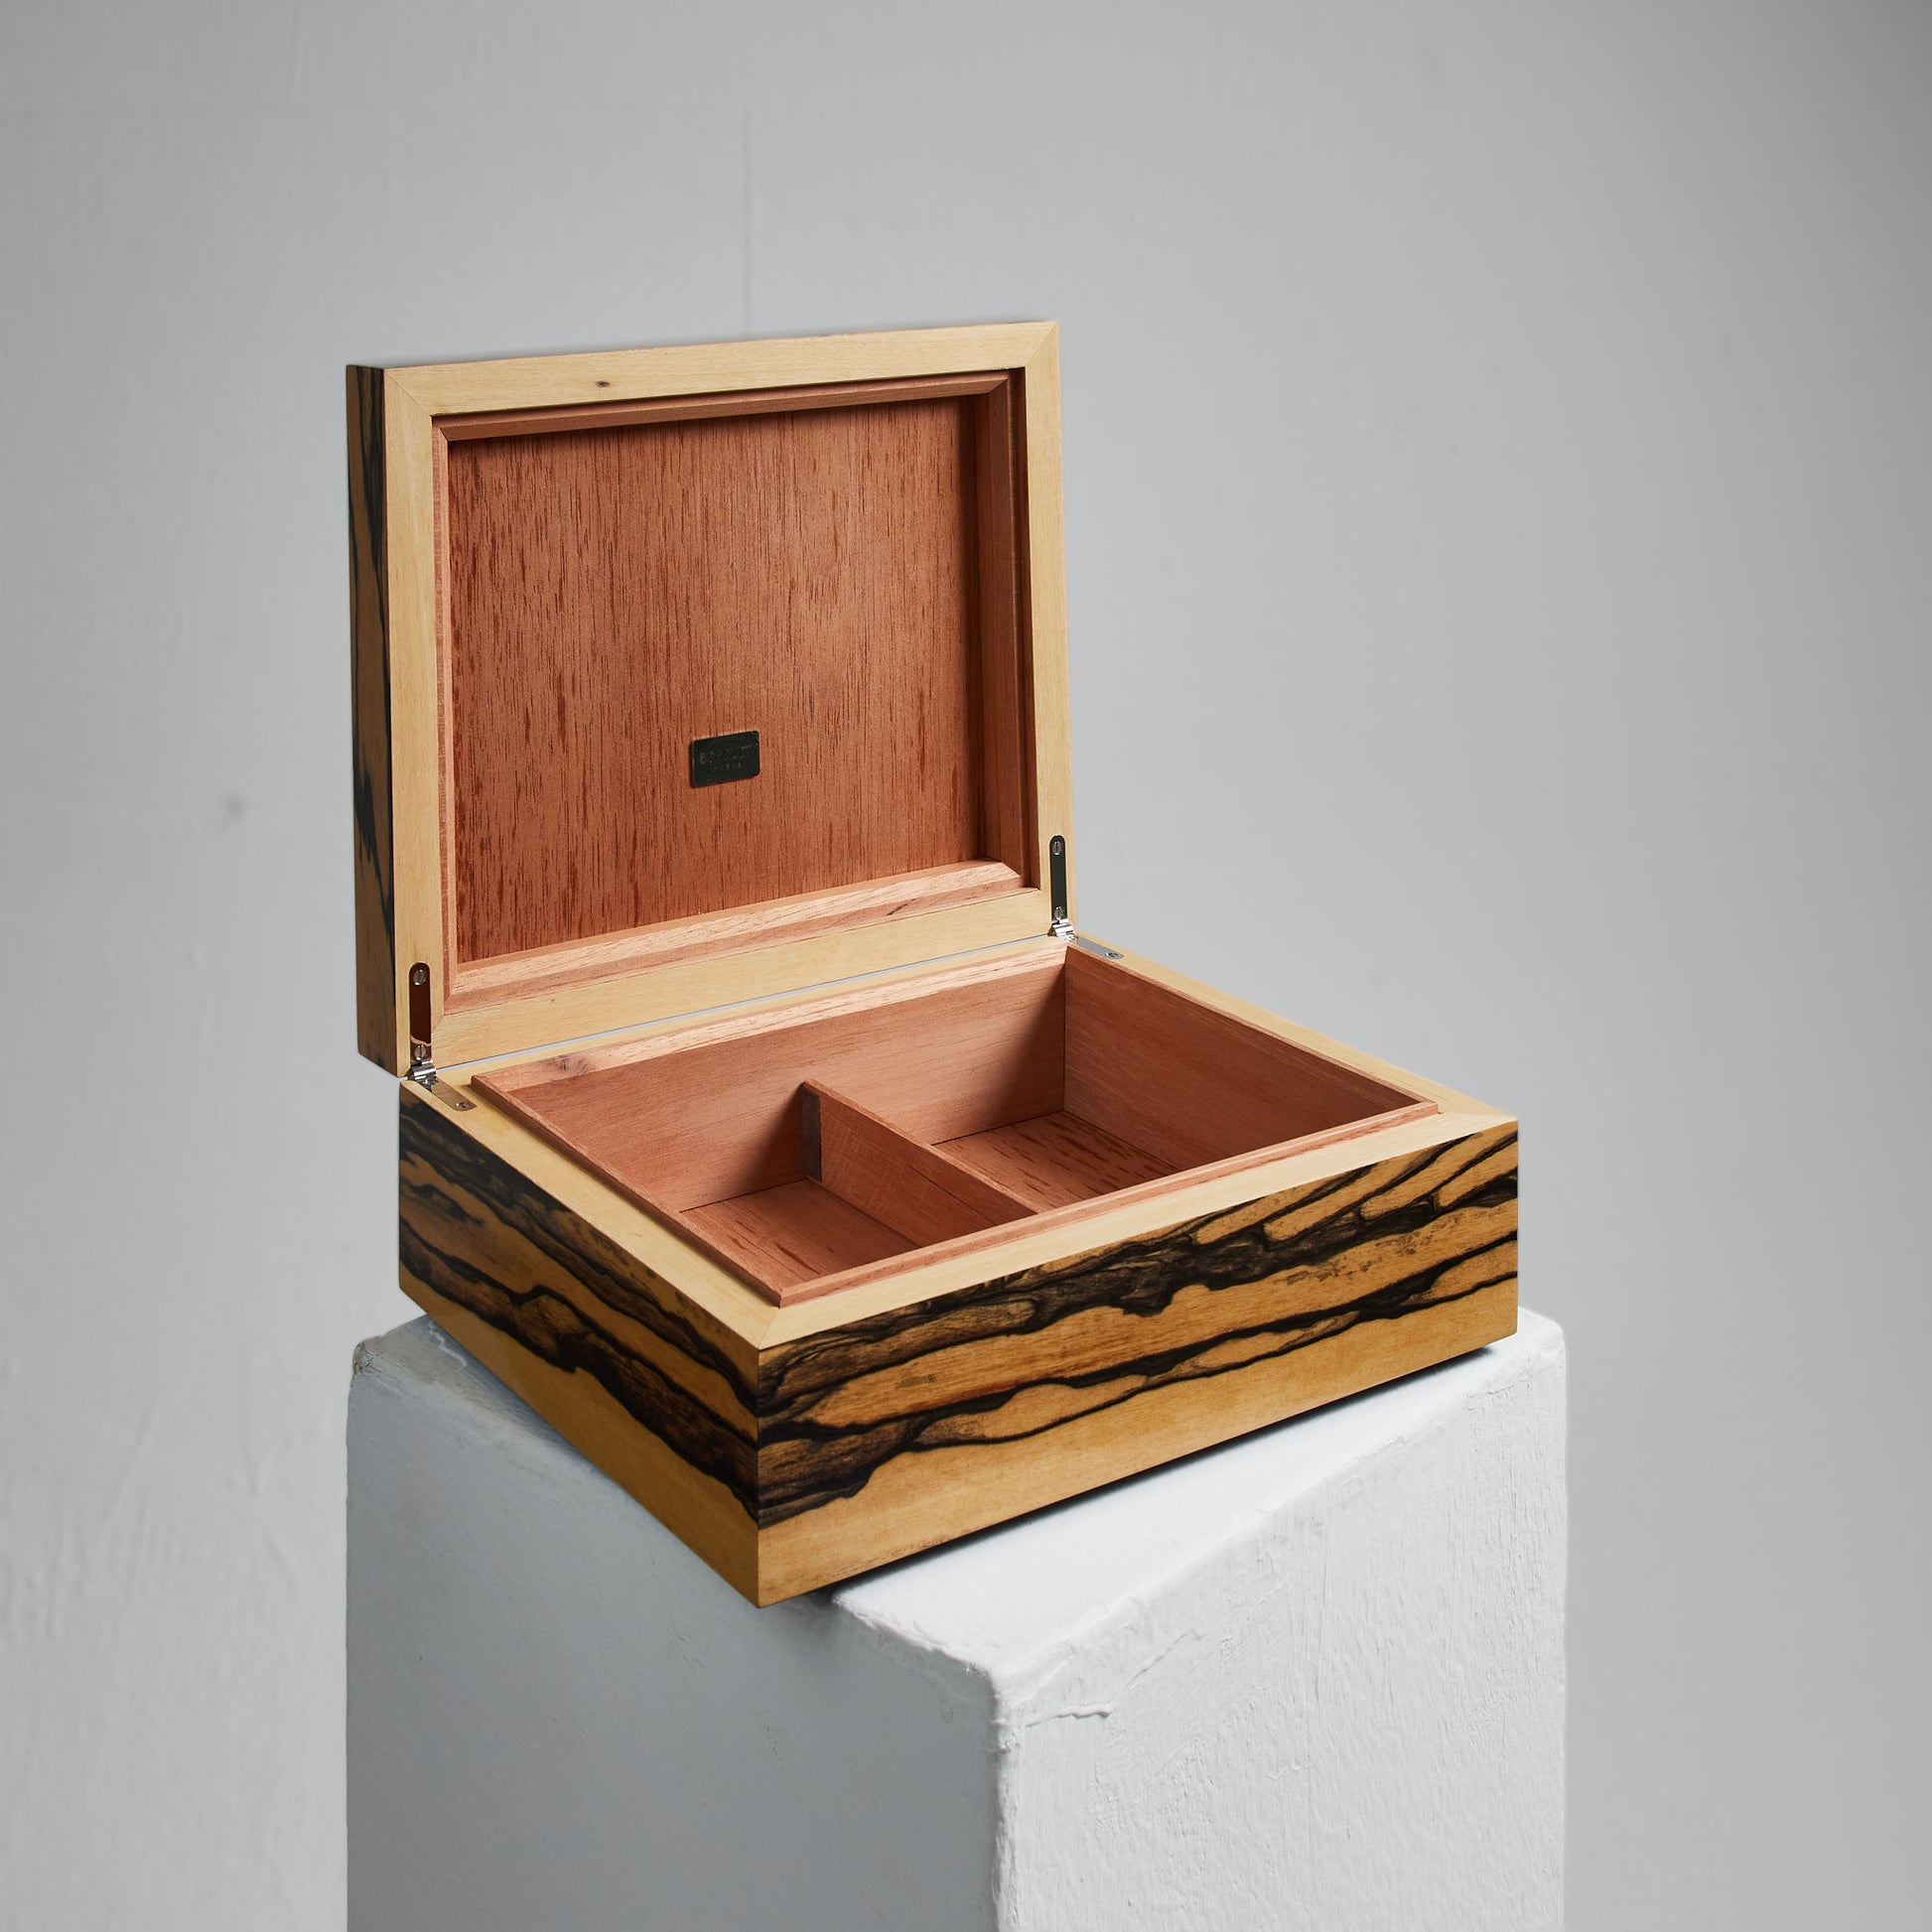 Impressive Cigar Humidor Box with Accessories, High Quality Lacquer Ebony  Finish